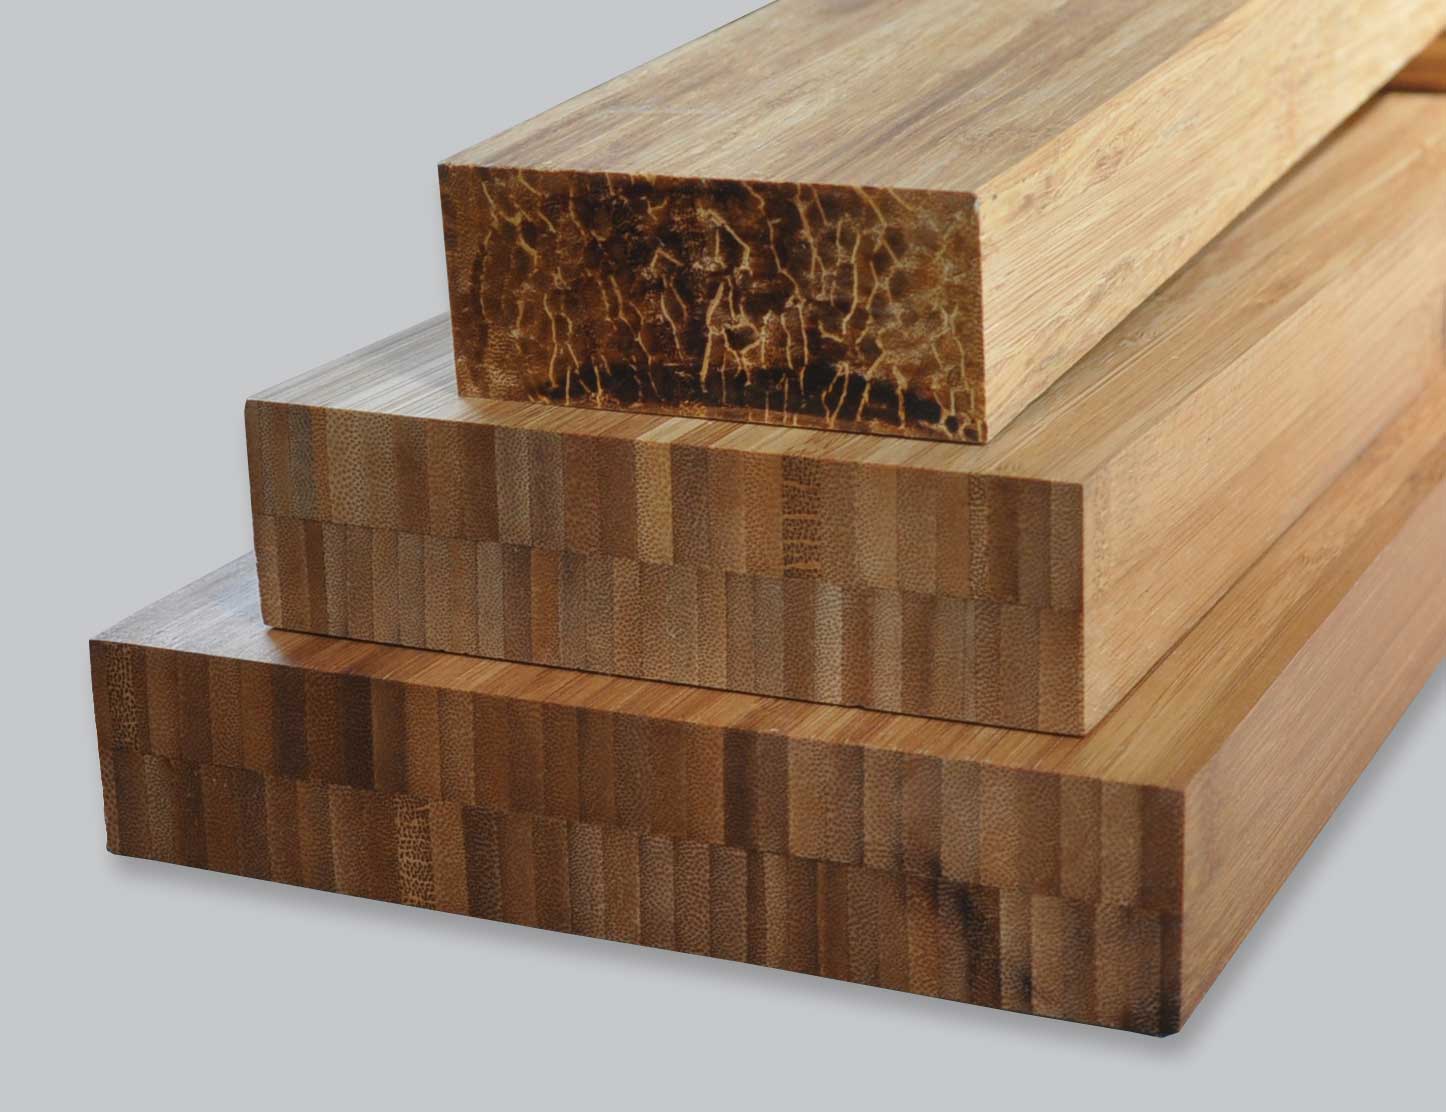 Plyboo Bamboo Plywood, Dimensional Lumber, and Veneer